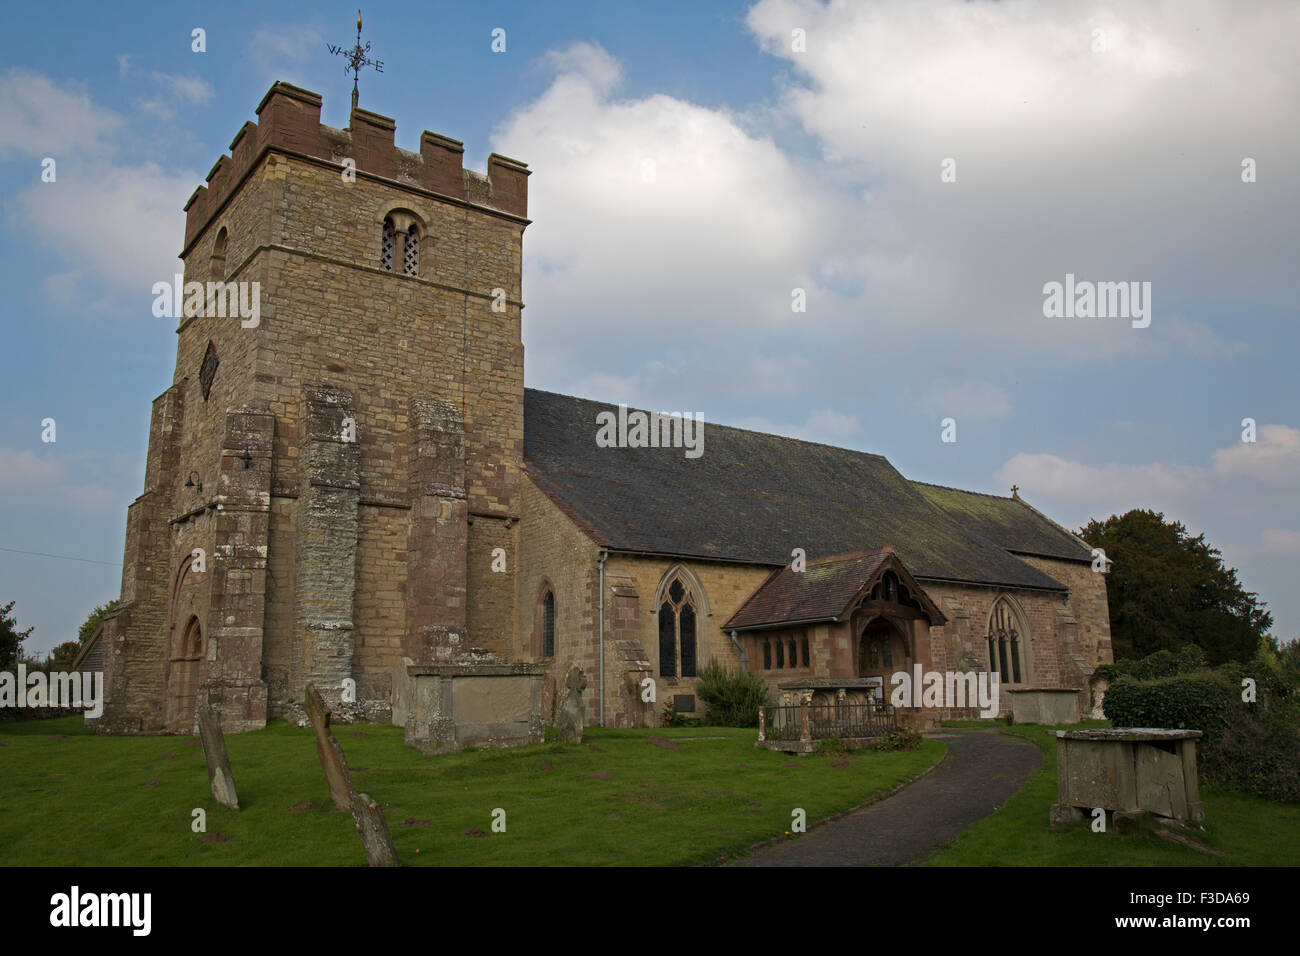 Diddlebury Church, Shropshire, England. The church has saxon origins and still has some saxon features visible. Stock Photo